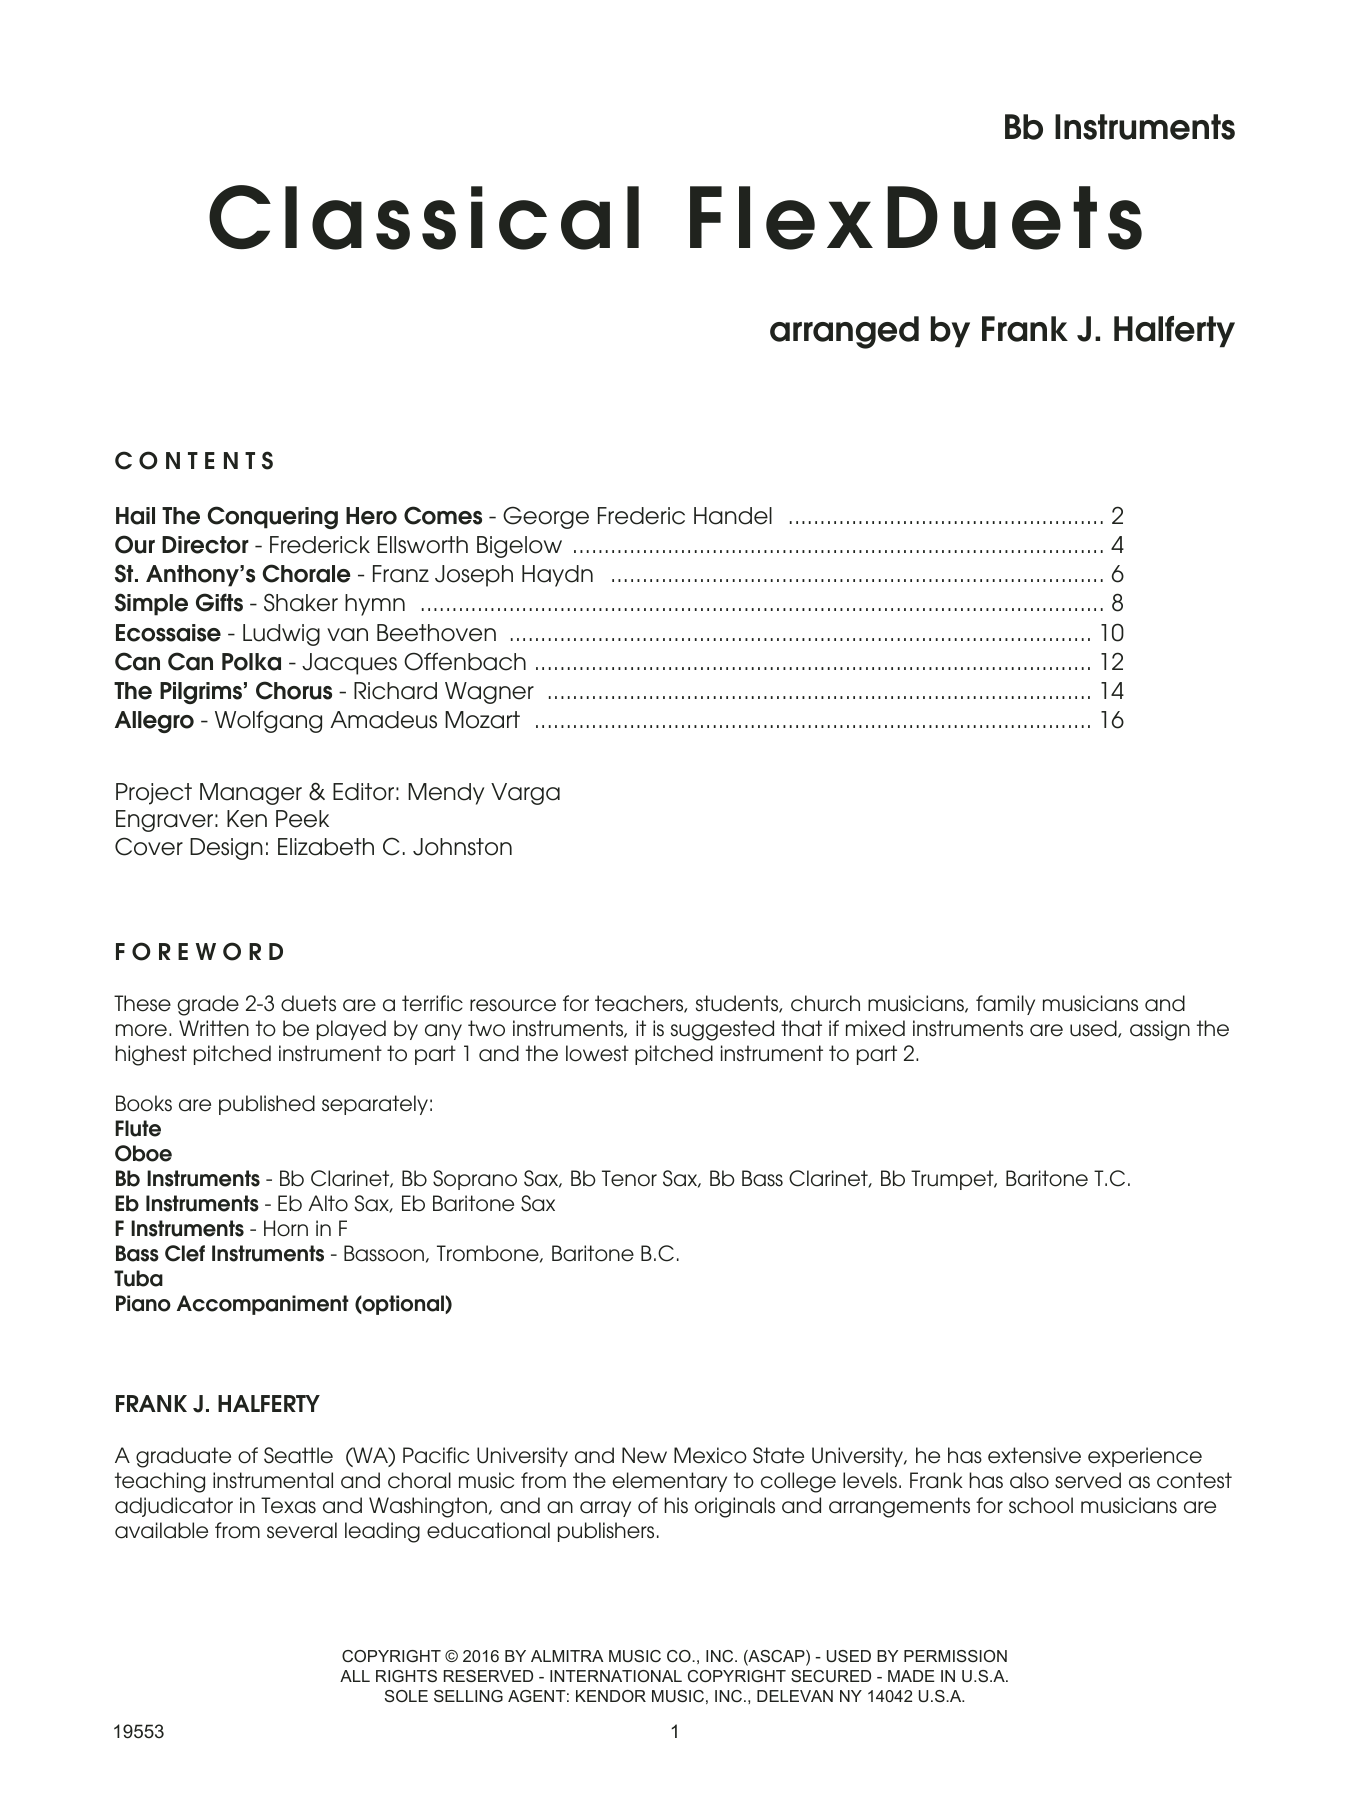 Download Frank J. Halferty Classical FlexDuets - Bb Instruments Sheet Music